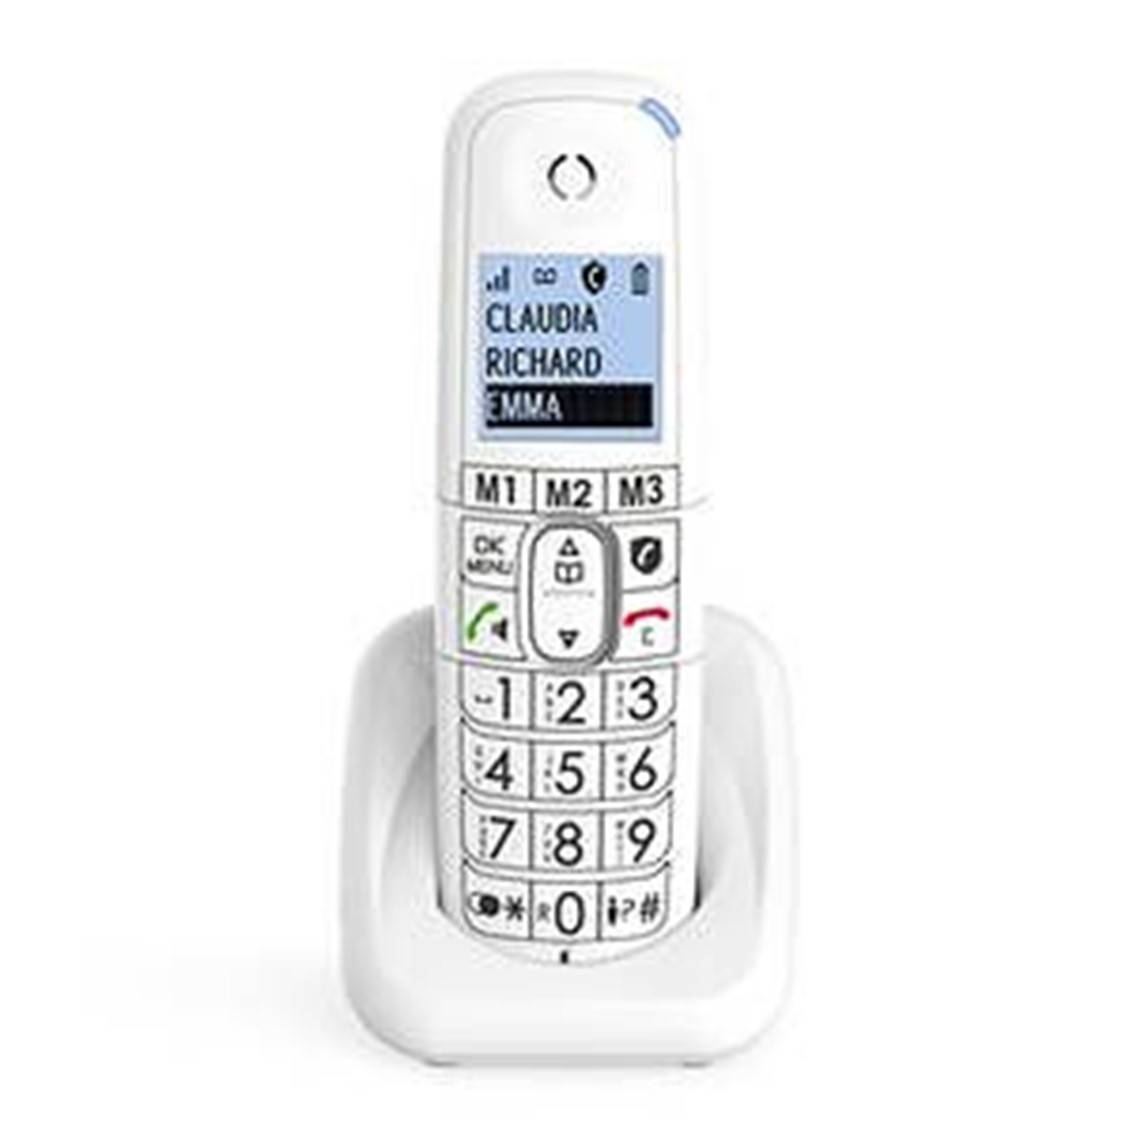 teléfono fijo inalámbrico - MOTOROLA C1001LB+ TELÉFONO INALÁMBRICO